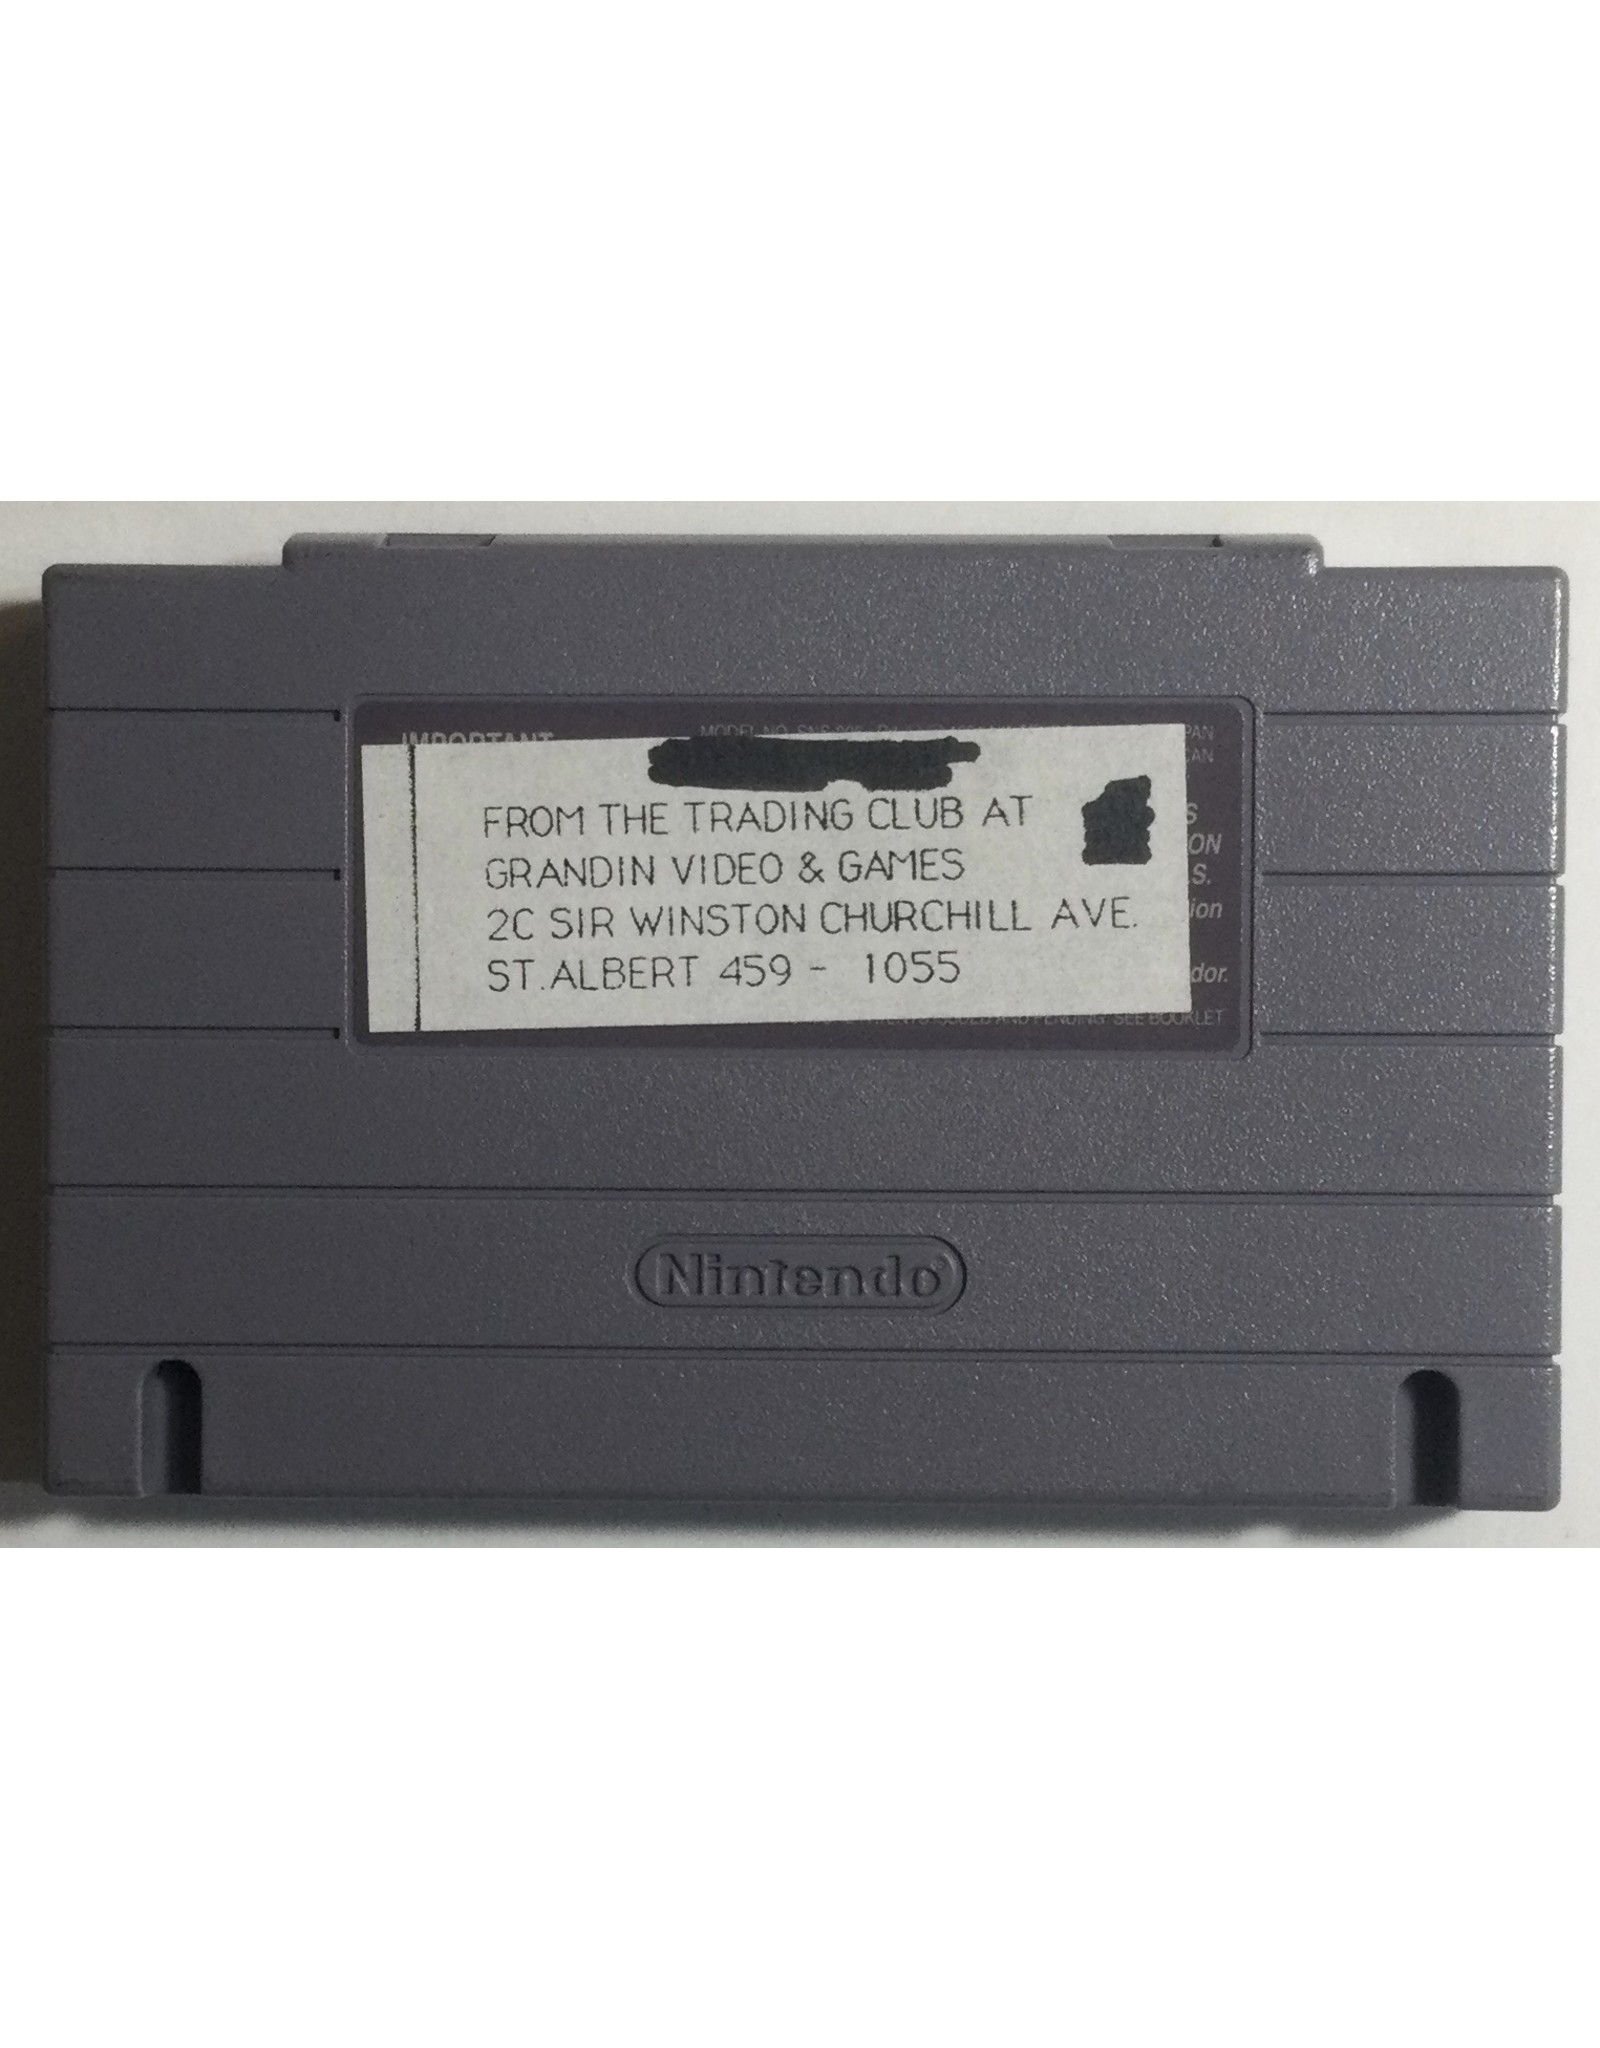 Nintendo Super Play Action Football for Super Nintendo Entertainment System (SNES)